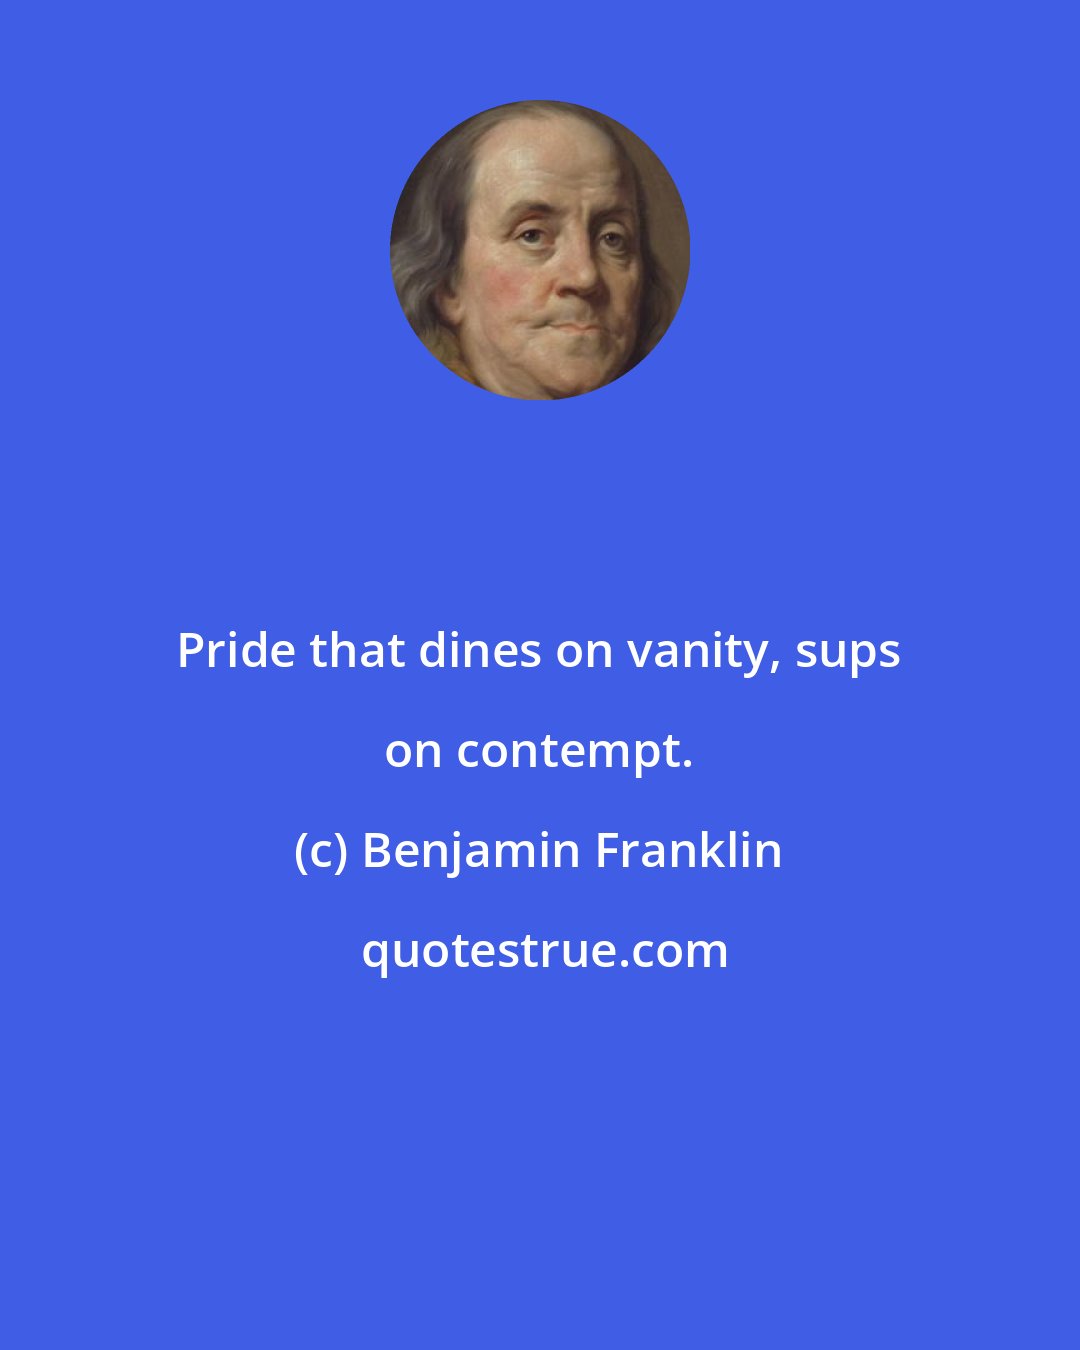 Benjamin Franklin: Pride that dines on vanity, sups on contempt.